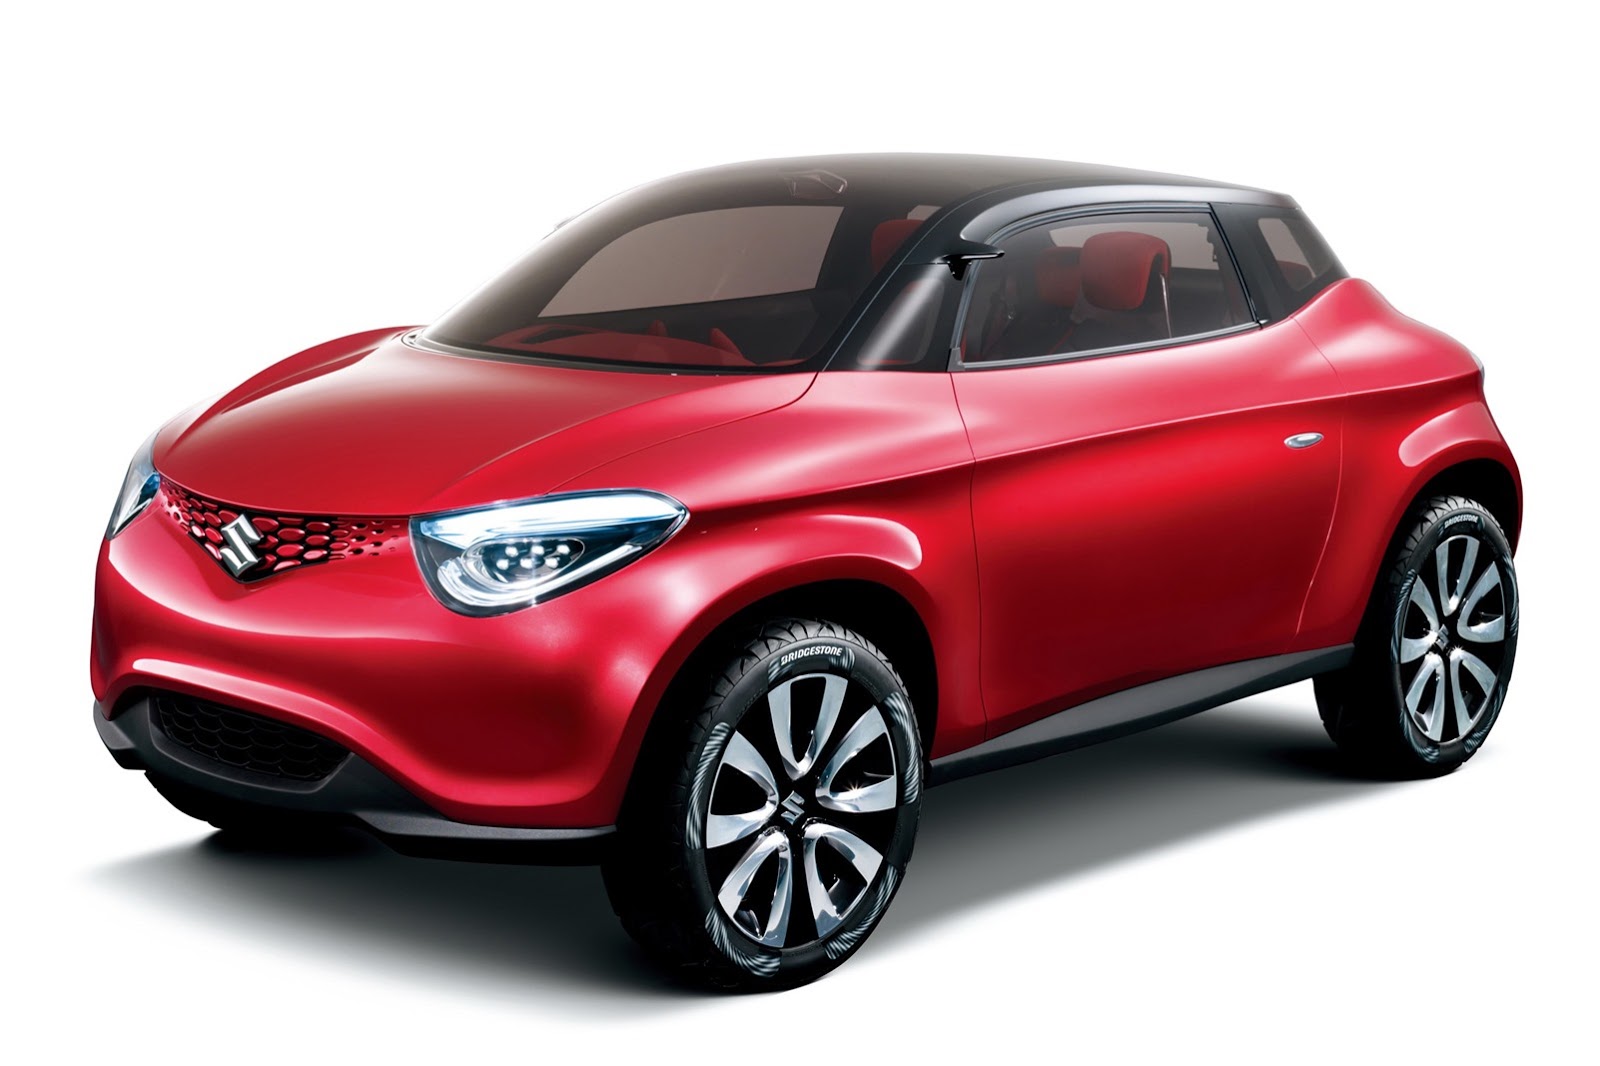 Suzuki Previews Three New Concept Cars Ahead of Tokyo - autoevolution